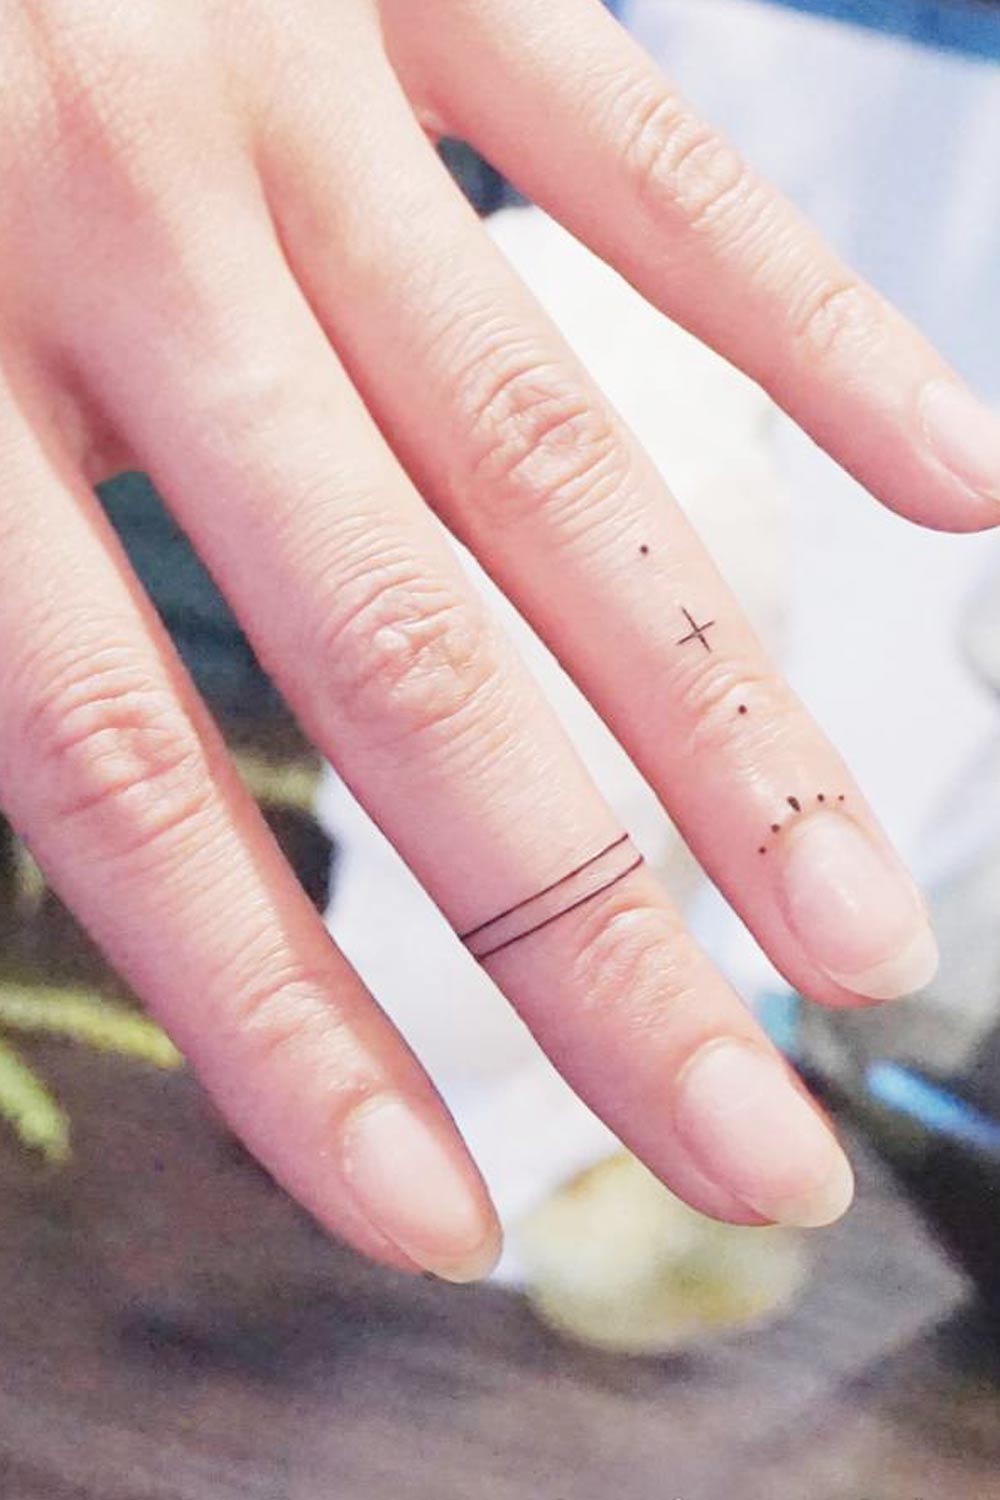 Minimalist cat tattoo on the middle finger.